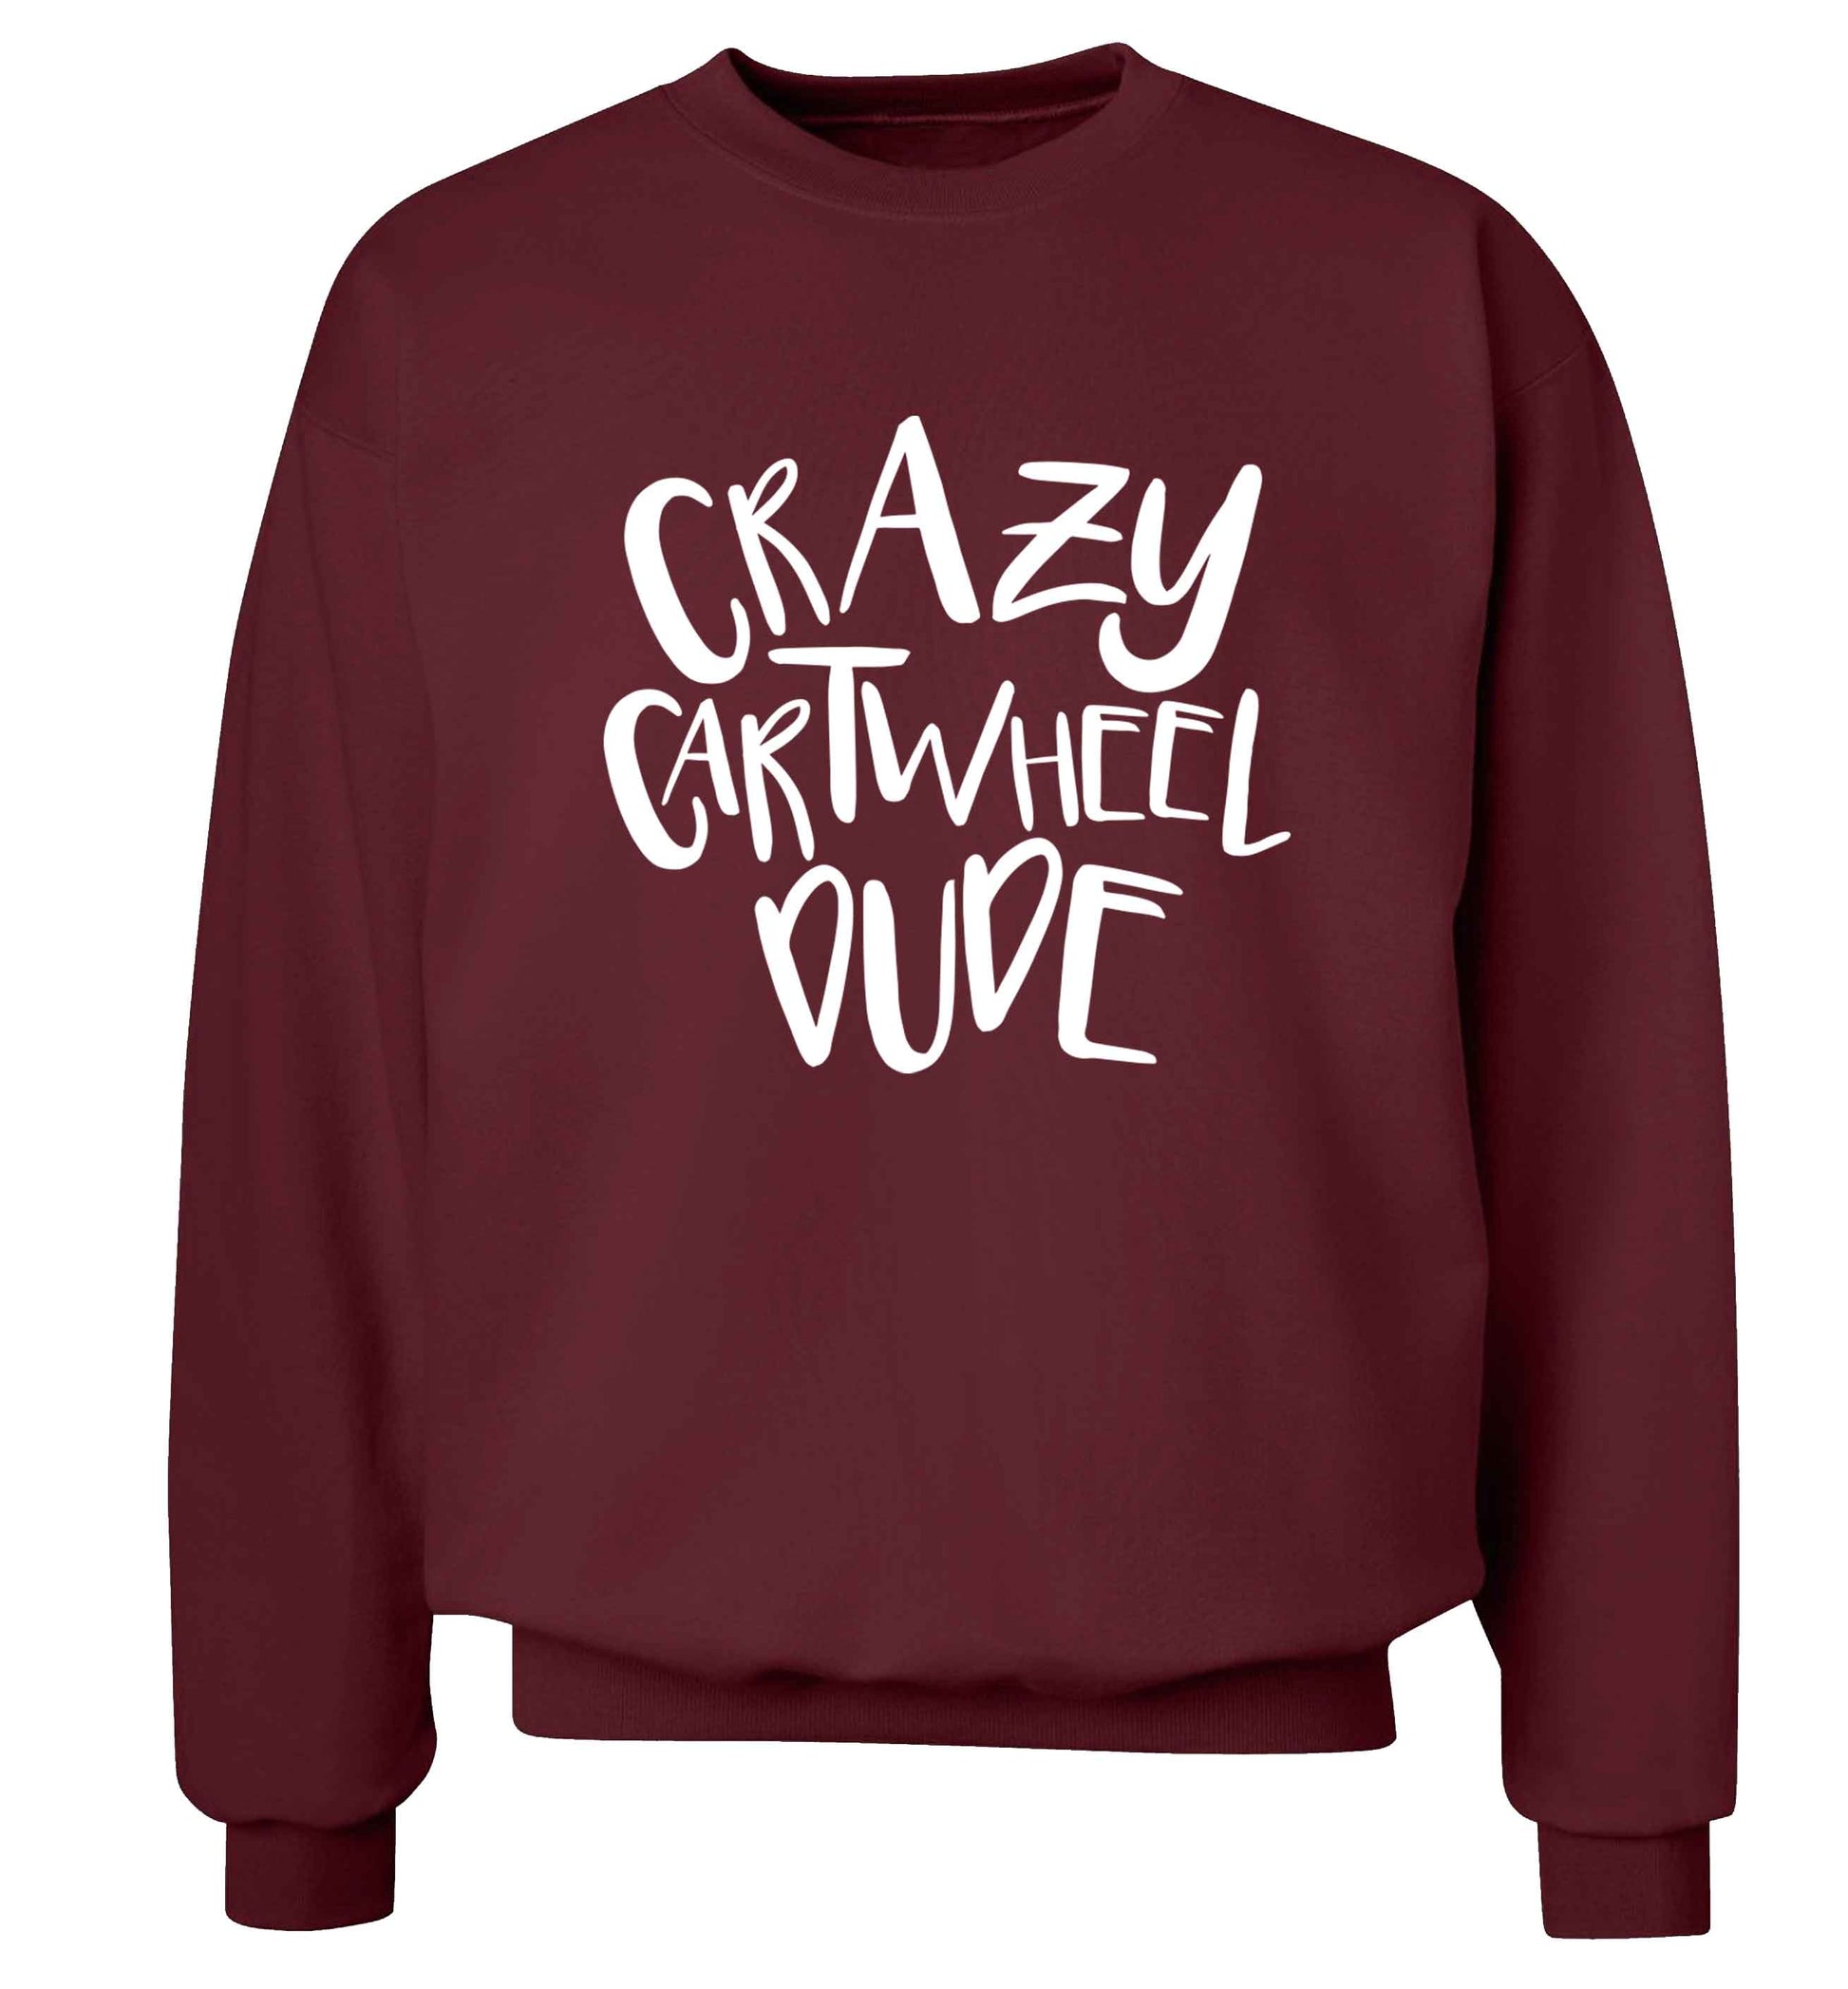 Crazy cartwheel dude Adult's unisex maroon Sweater 2XL